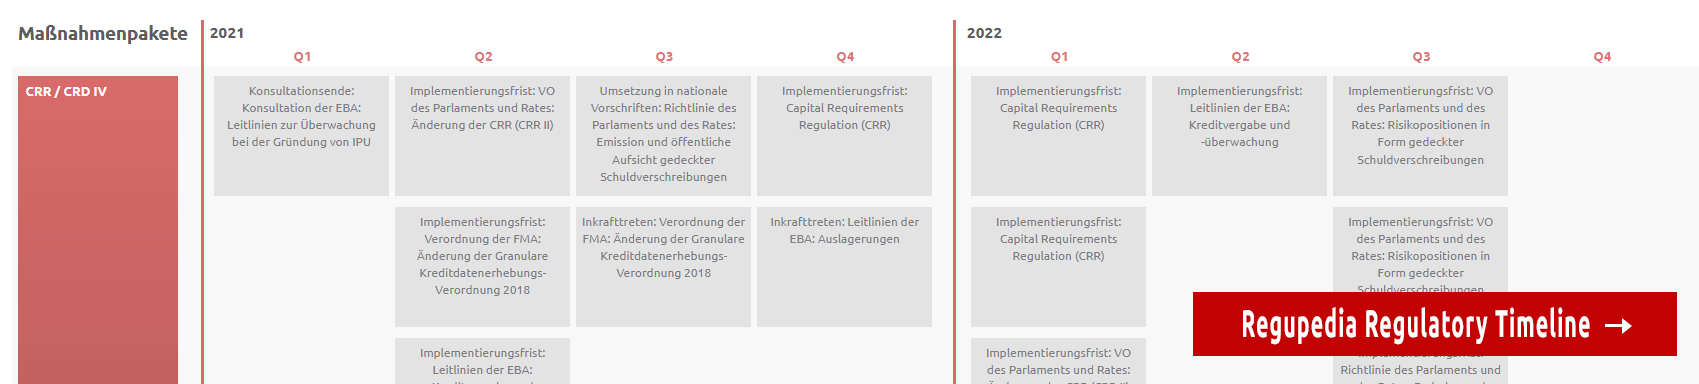 Zur Regupedia Regulatory Timeline